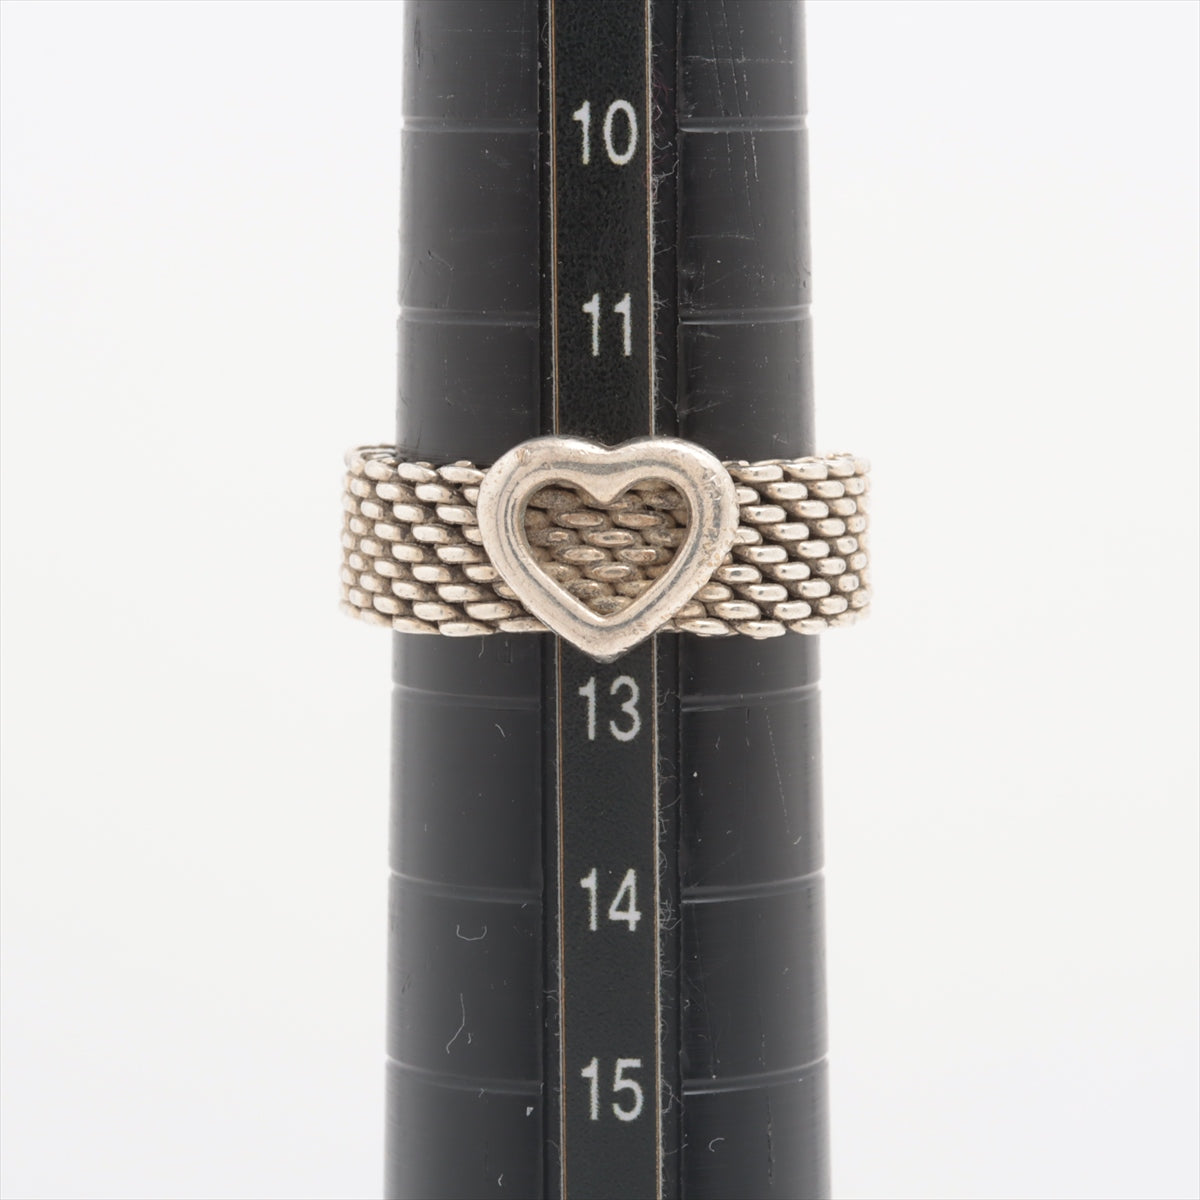 Tiffany Somerset hearts rings 925 5.0g Silver